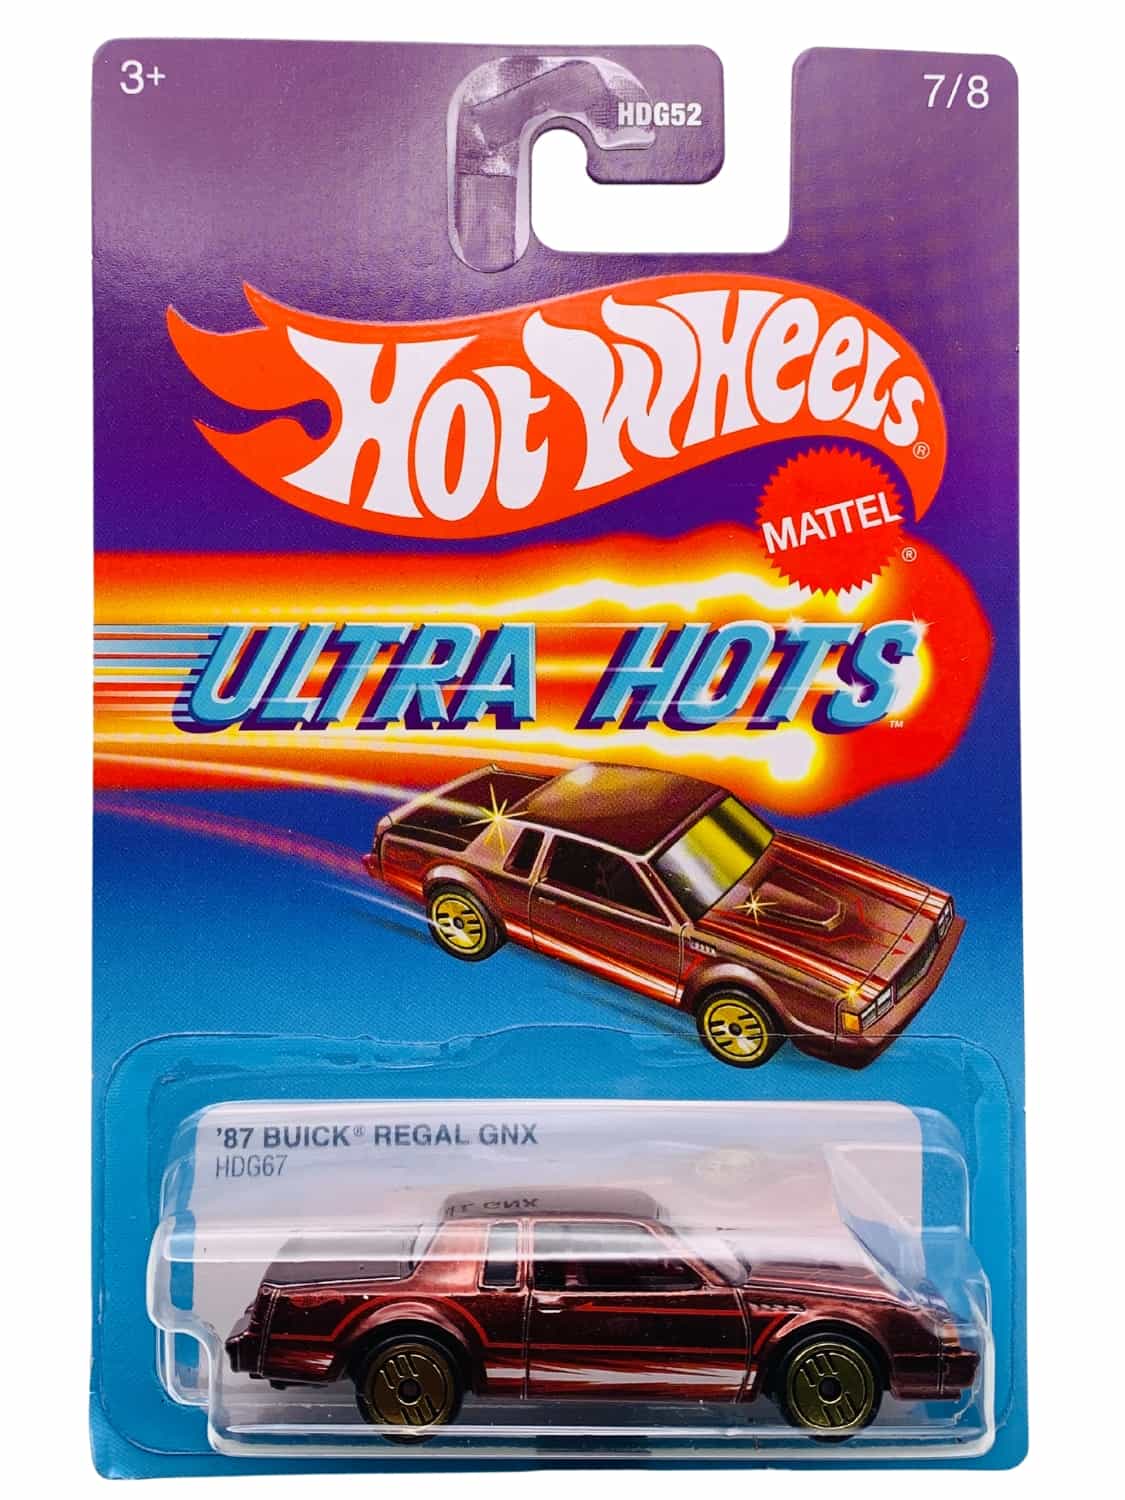 HDG67 Buick Regal Ultra Hot Wheels